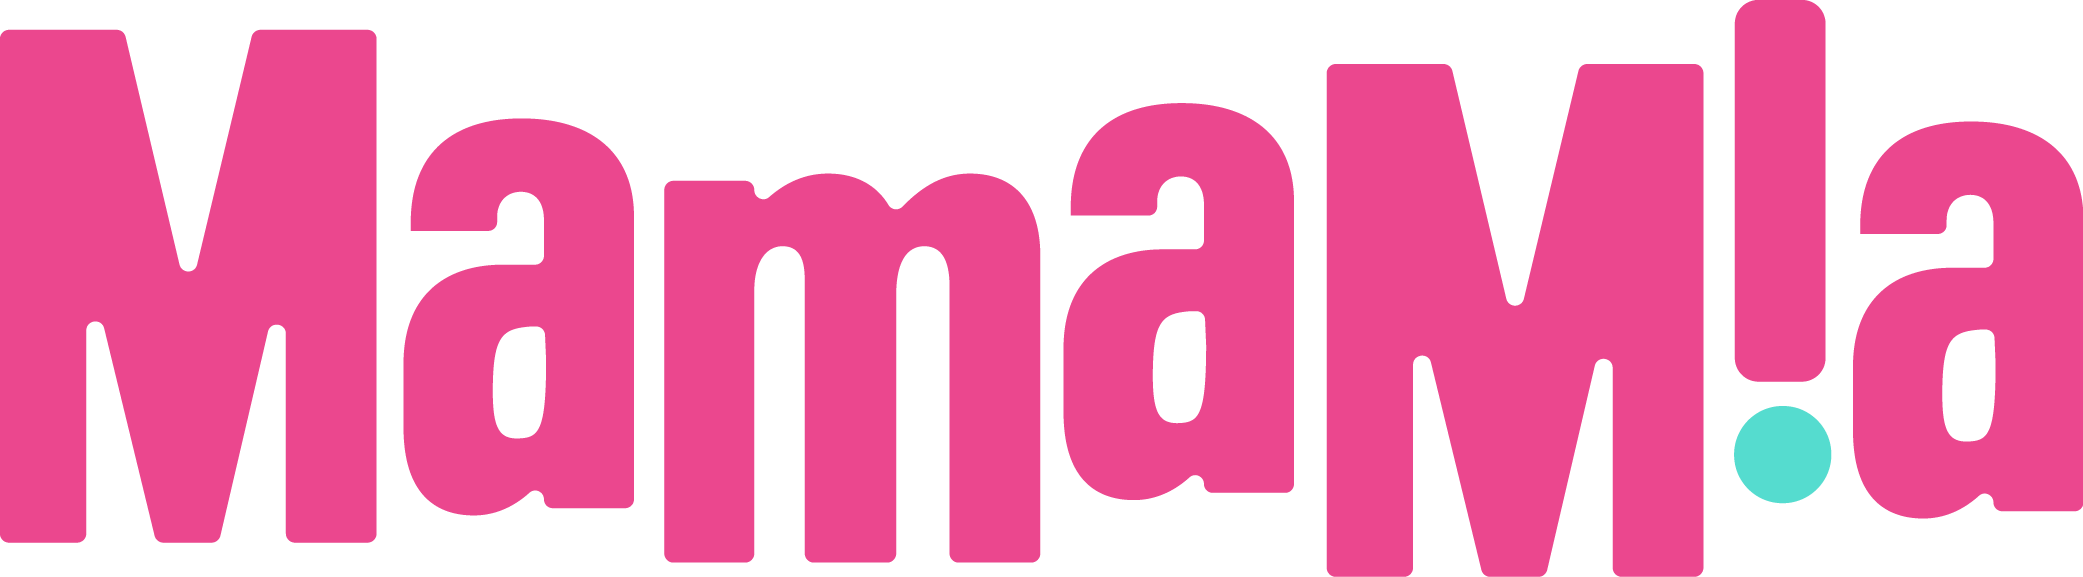 Mamamia-logo - Mamamia Com Au Logo (2083x577)